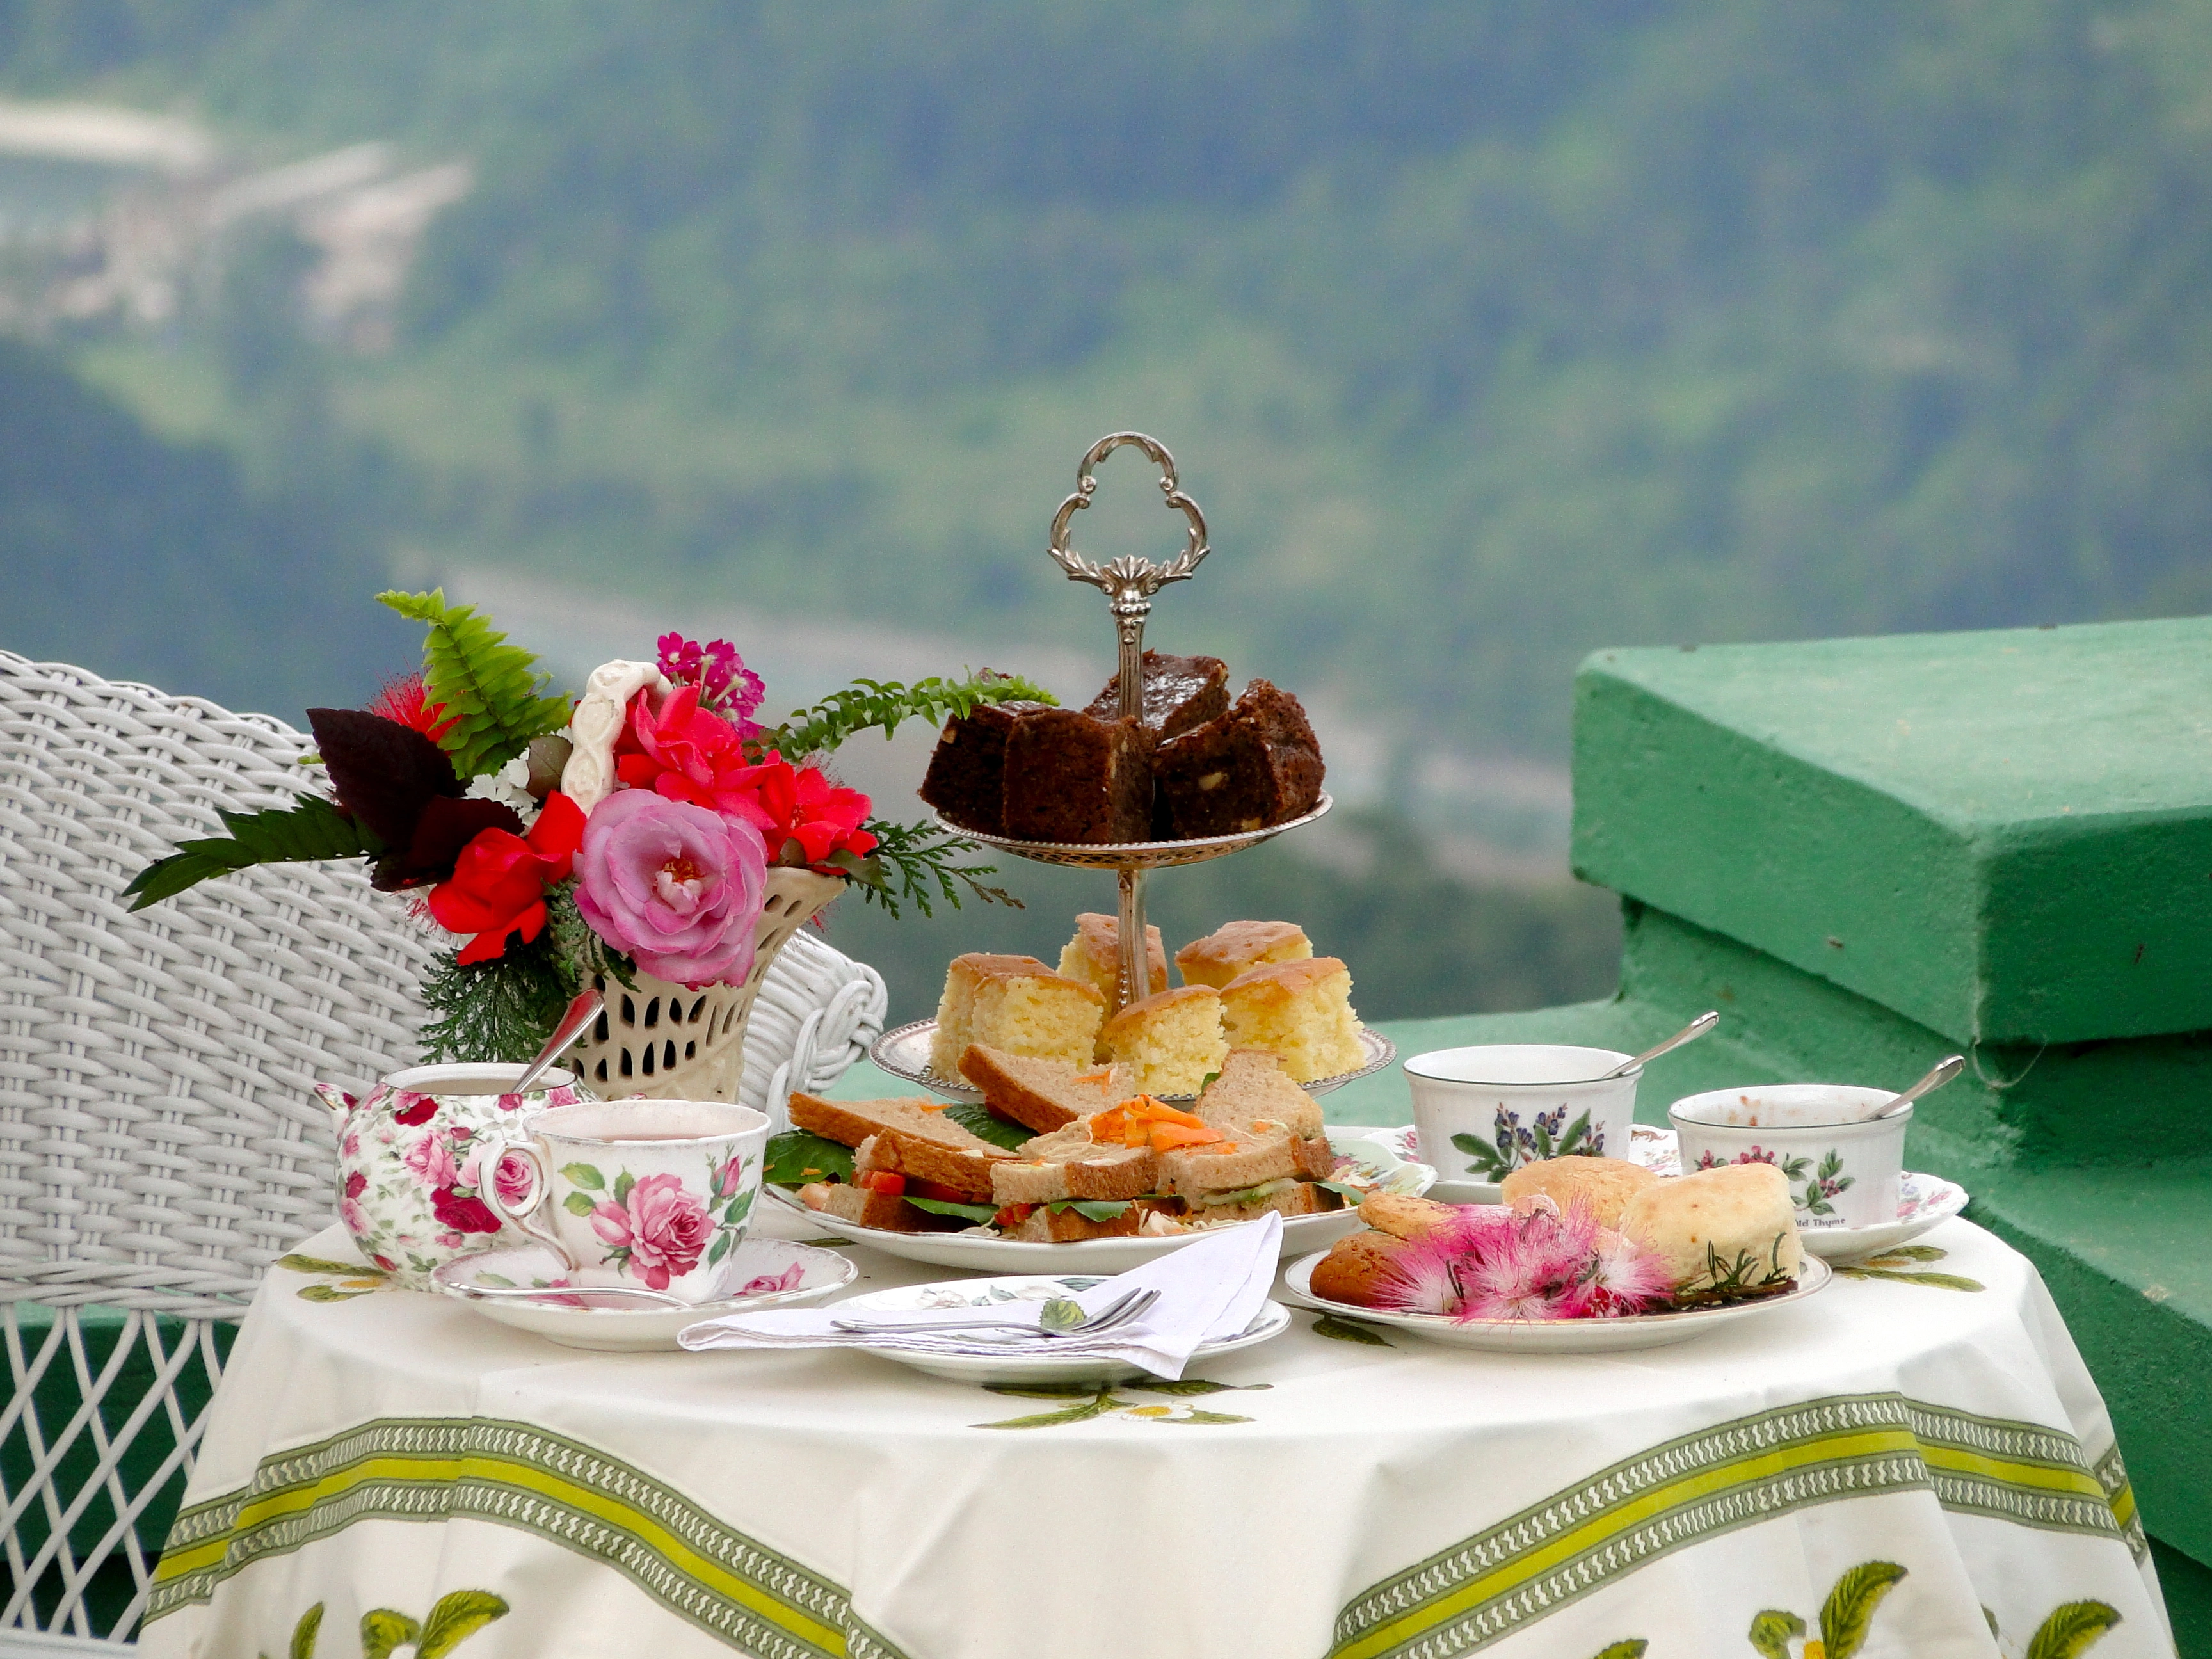 Tea with the mountain view [Image via Travel Journalist, Subhasish Chakraborty].